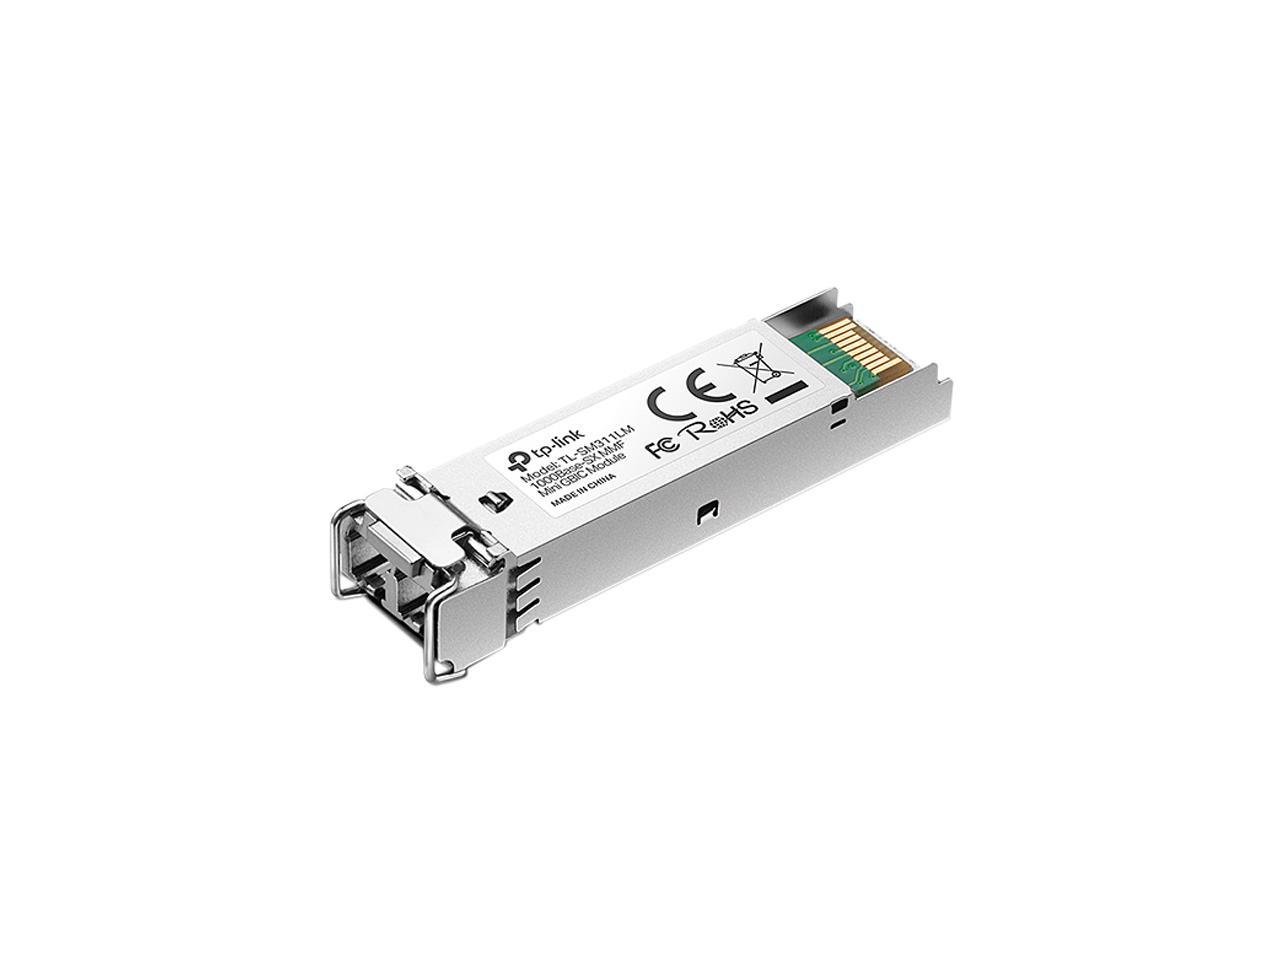 SFP SFP-23A-AO Mini-GBIC transceiver Module Gigabit Ethernet AddOn